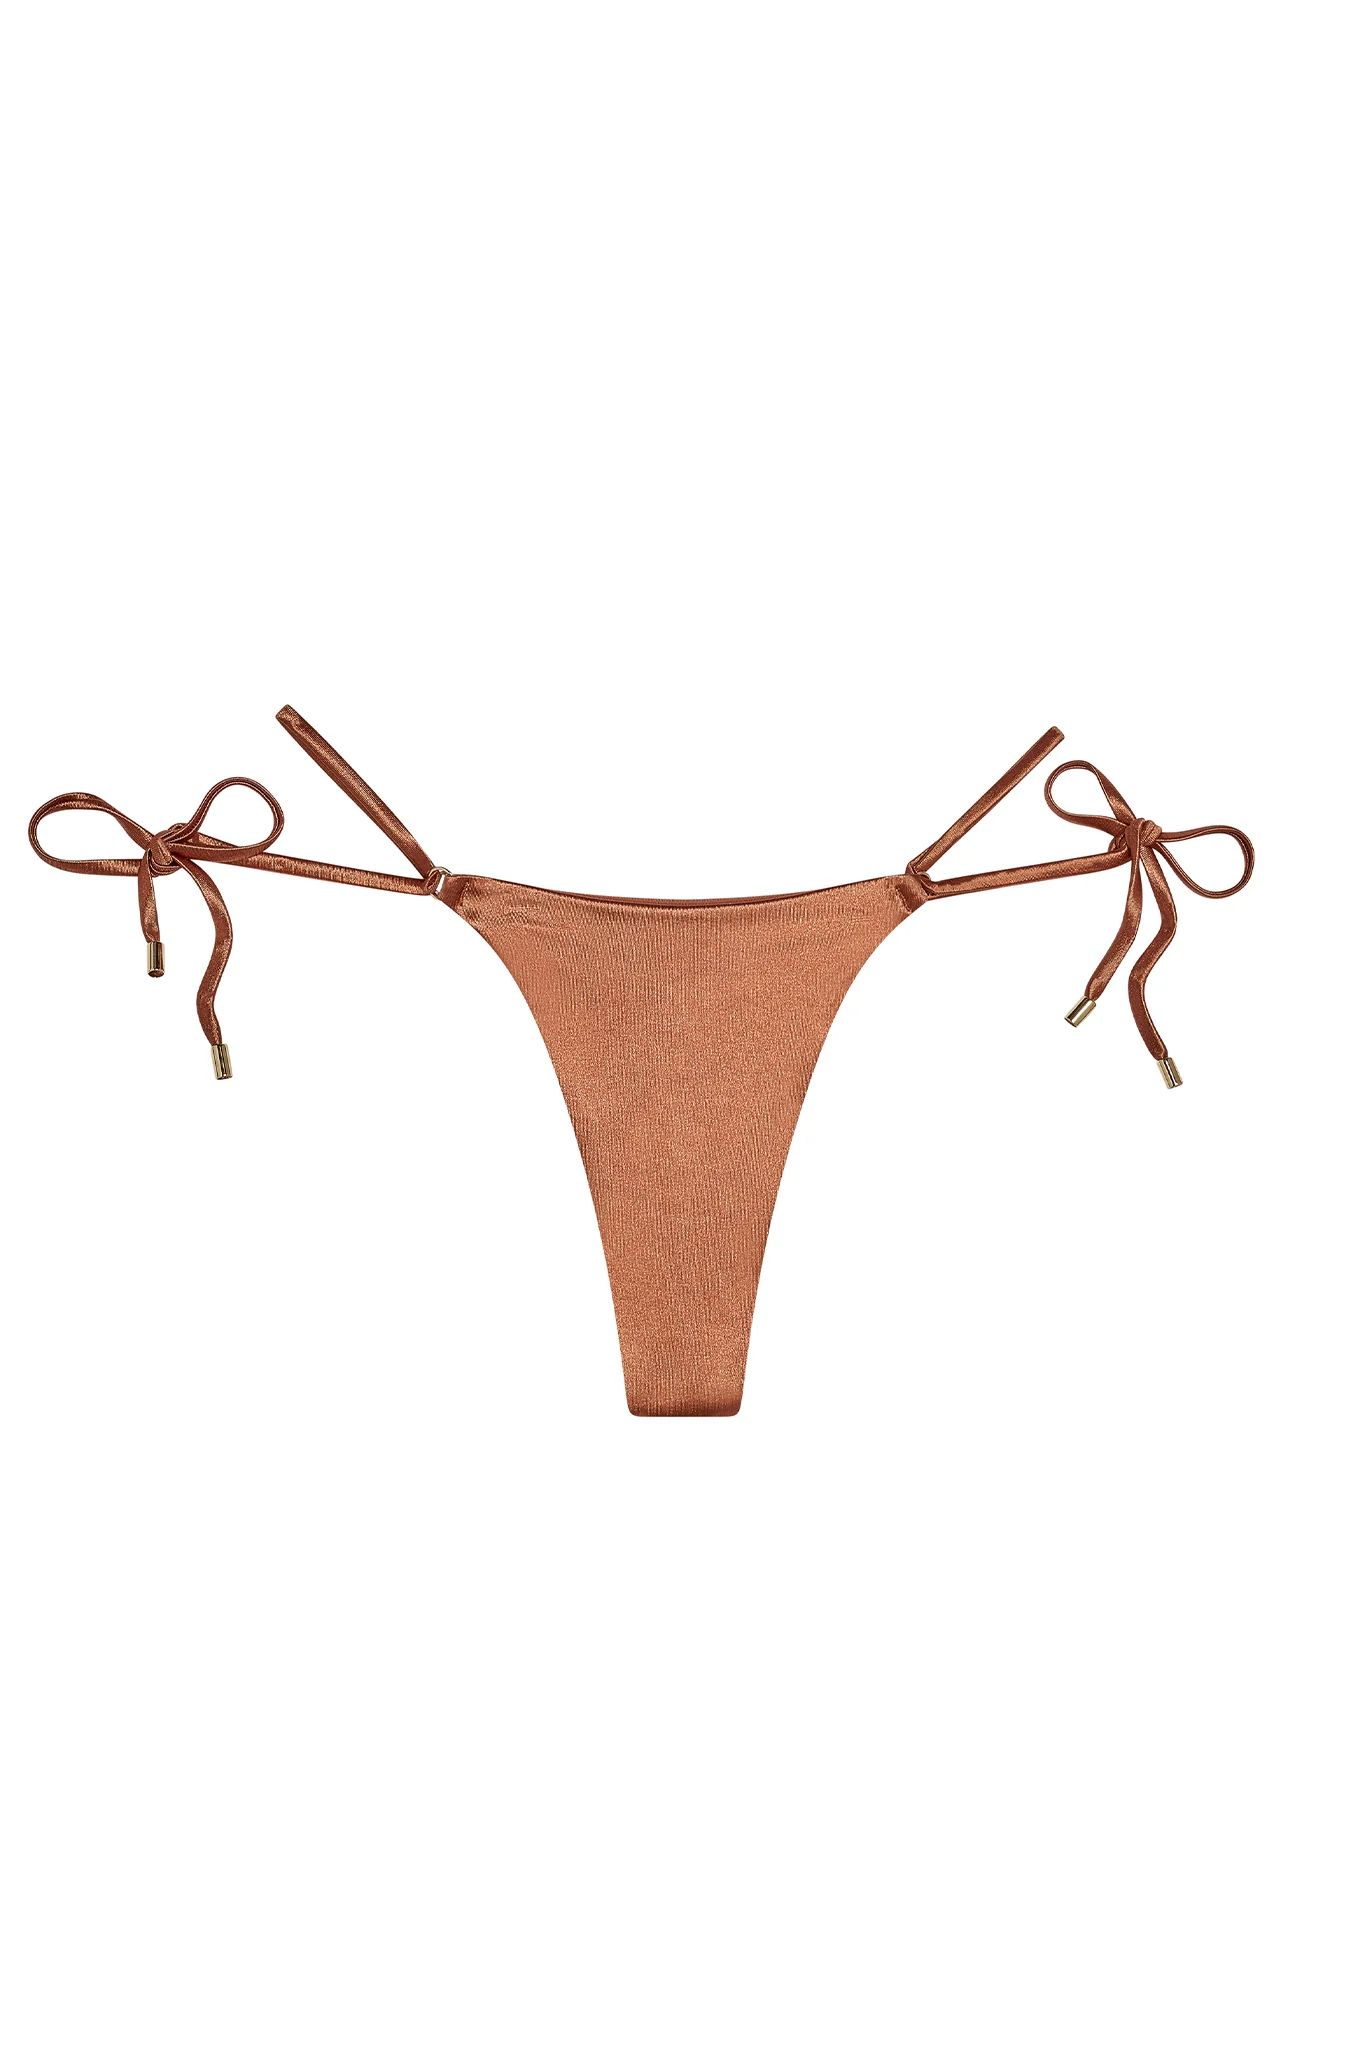 Hanalei Bottom - Bronze Shiny Jersey | Monday Swimwear